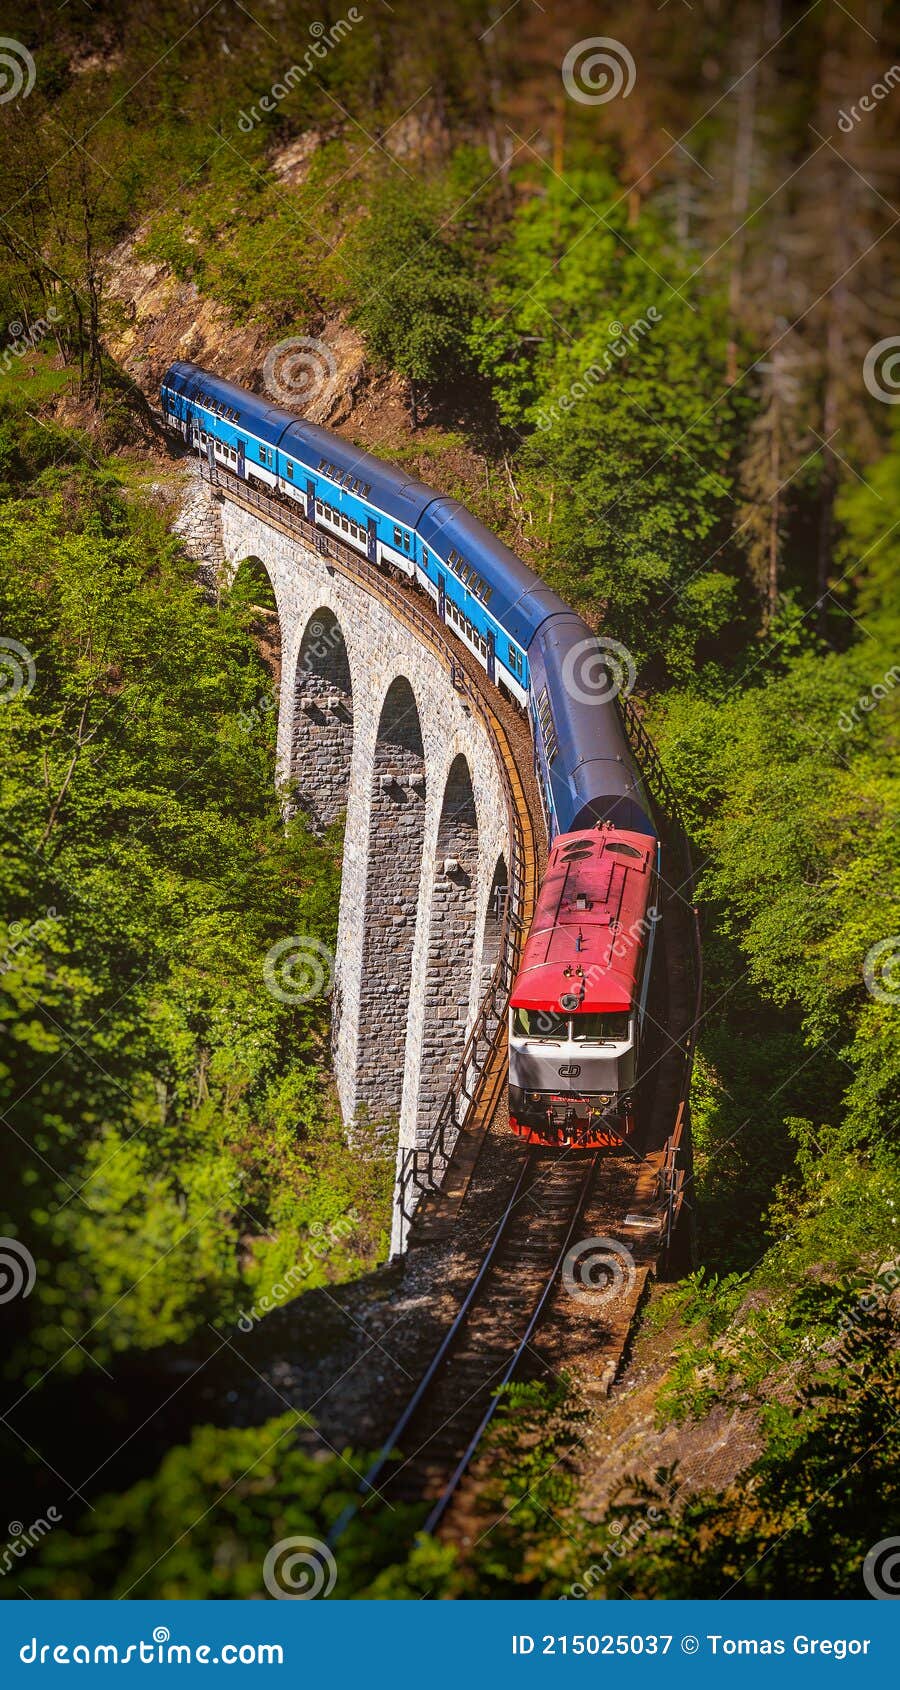 train on zampach viaduct, czech republic